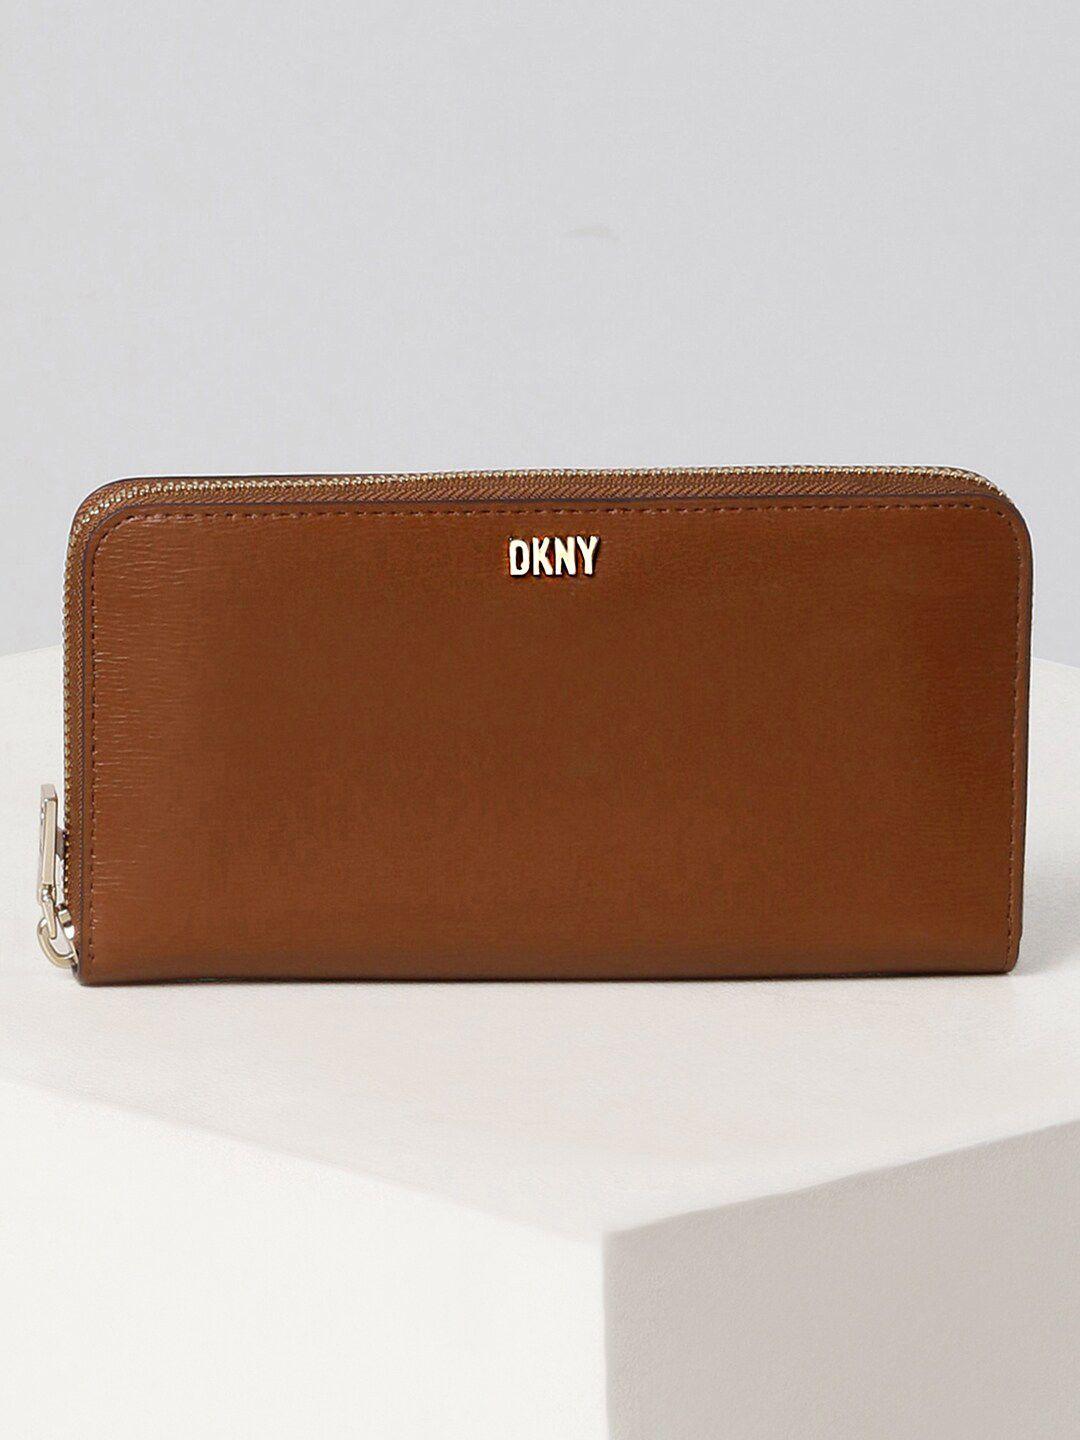 dkny women leather zip around wallet